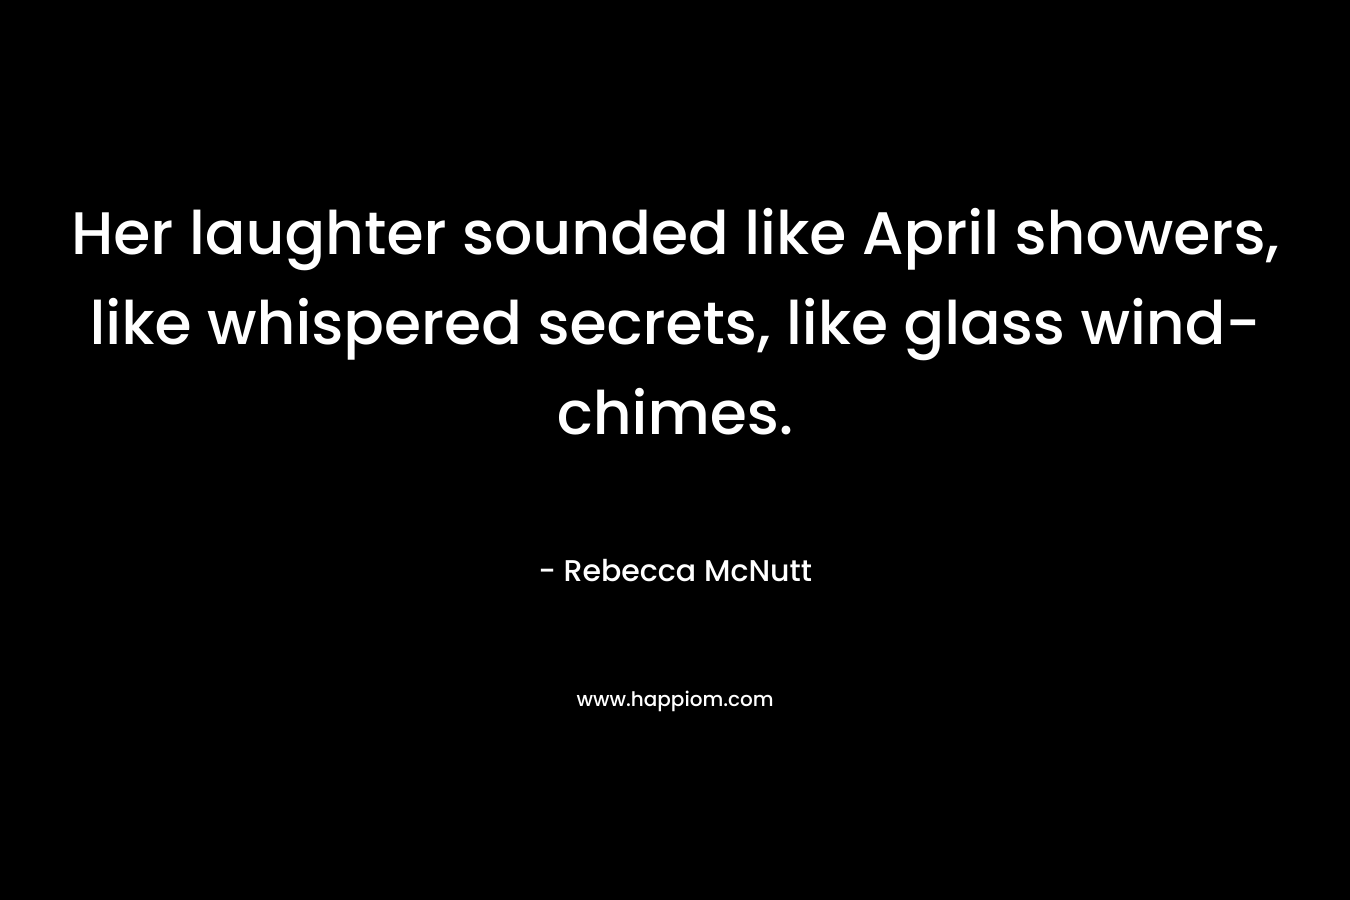 Her laughter sounded like April showers, like whispered secrets, like glass wind-chimes. – Rebecca McNutt